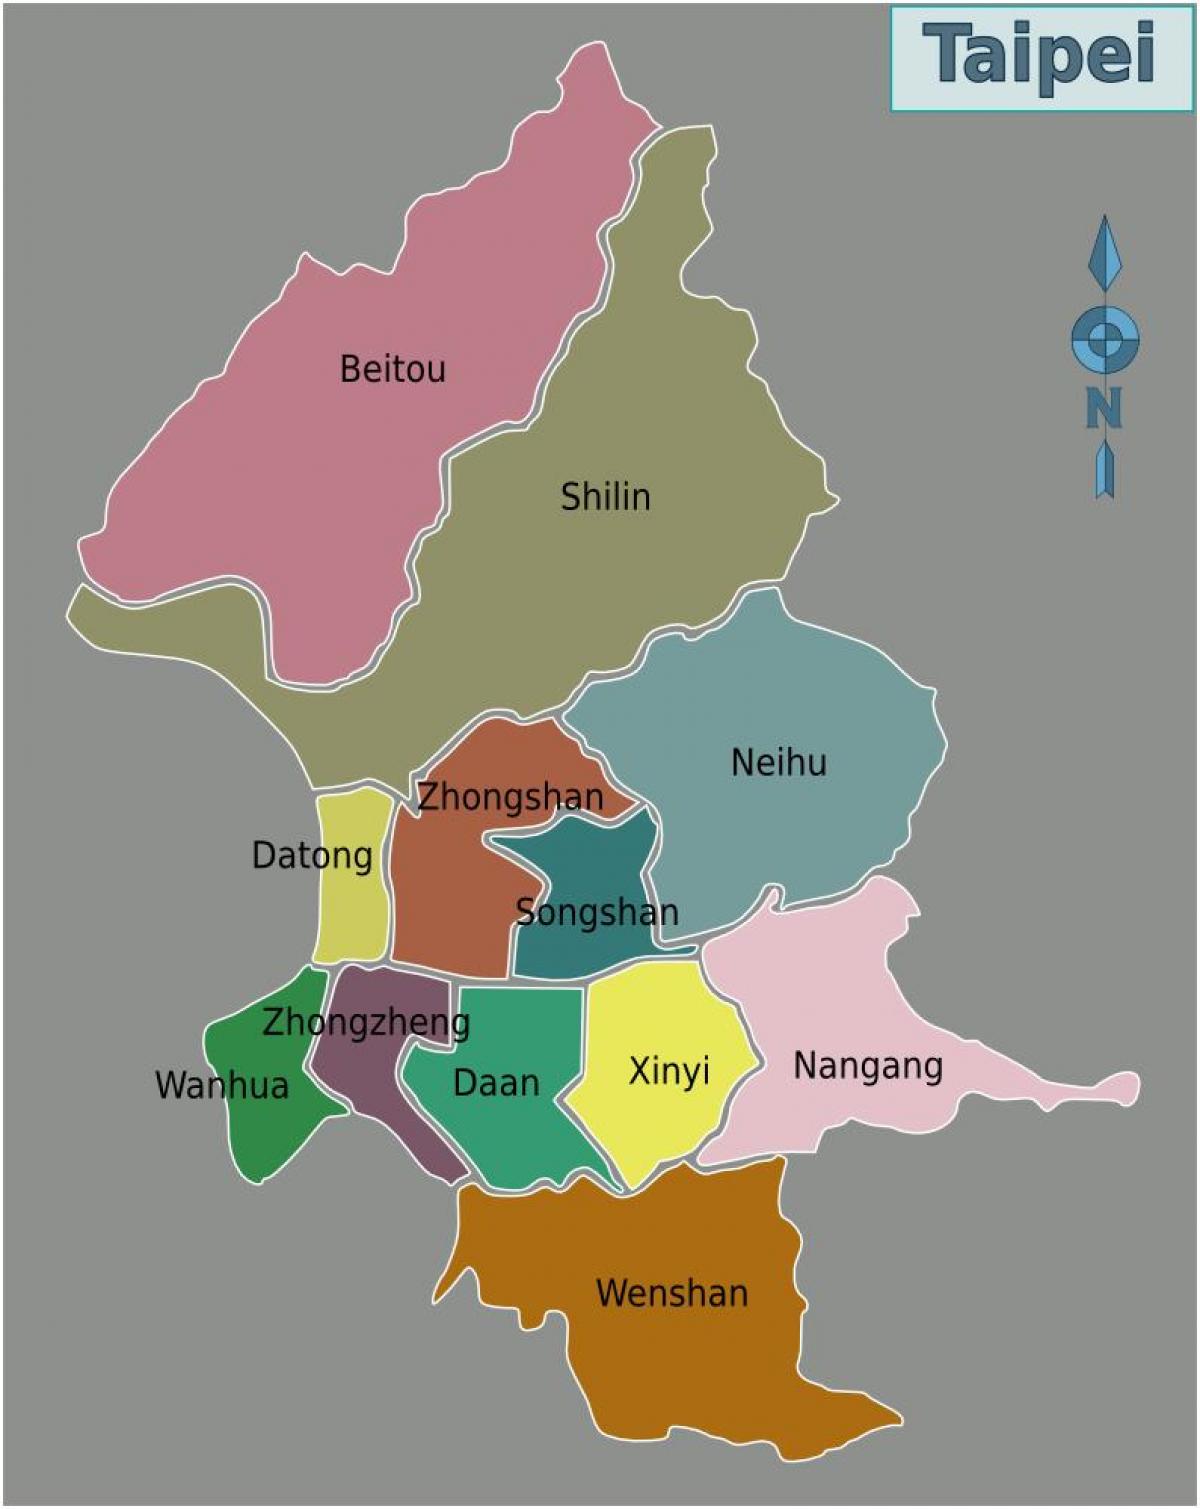 Mapa de distrito de la ciudad de Taipei